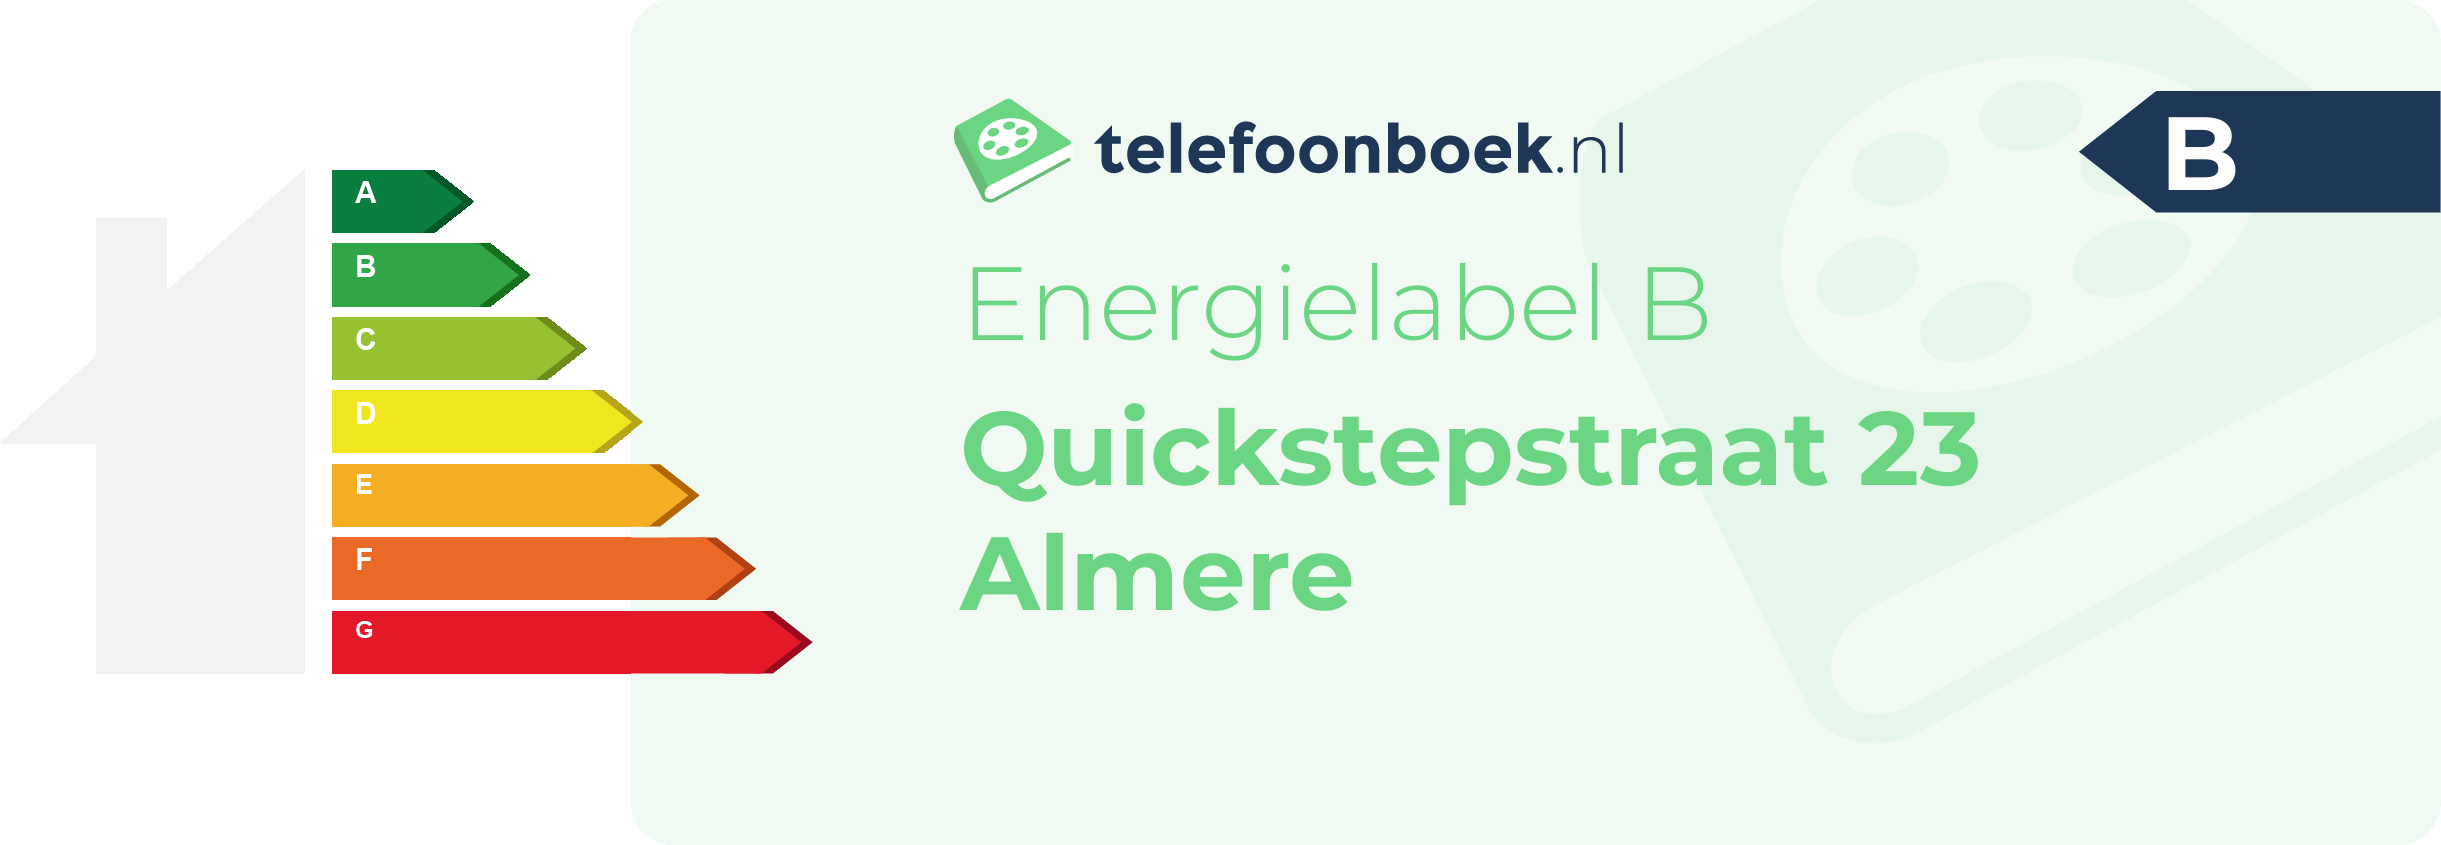 Energielabel Quickstepstraat 23 Almere